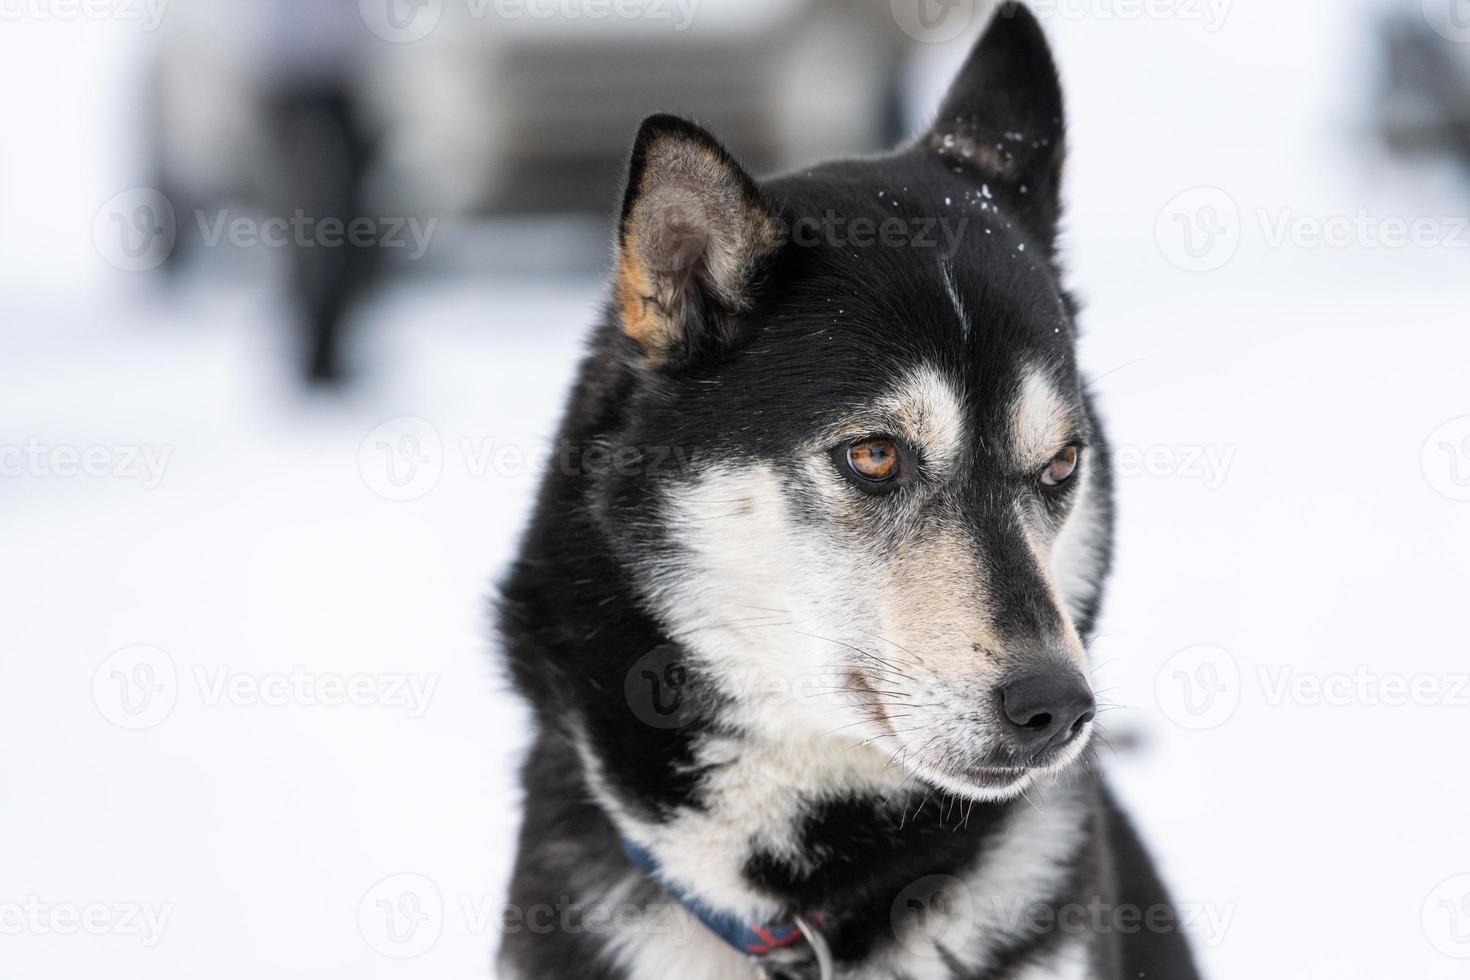 Husky dog portrait, winter snowy background. Funny pet on walking before sled dog training. photo